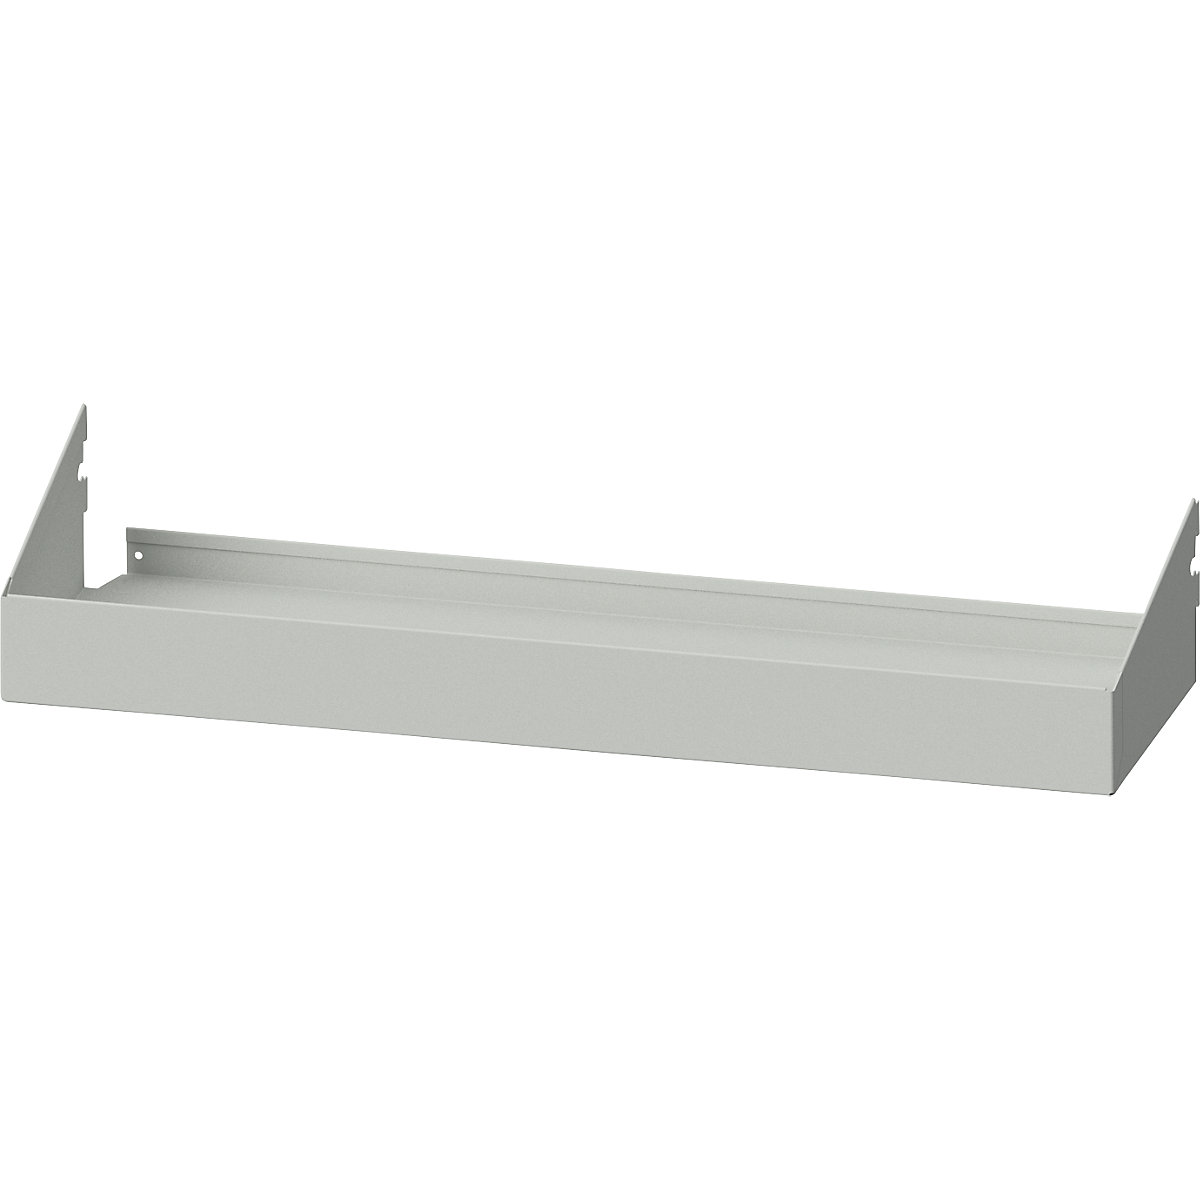 Tray shelf – ANKE, 75 mm raised edges, WxD 800 x 250 mm, grey-4